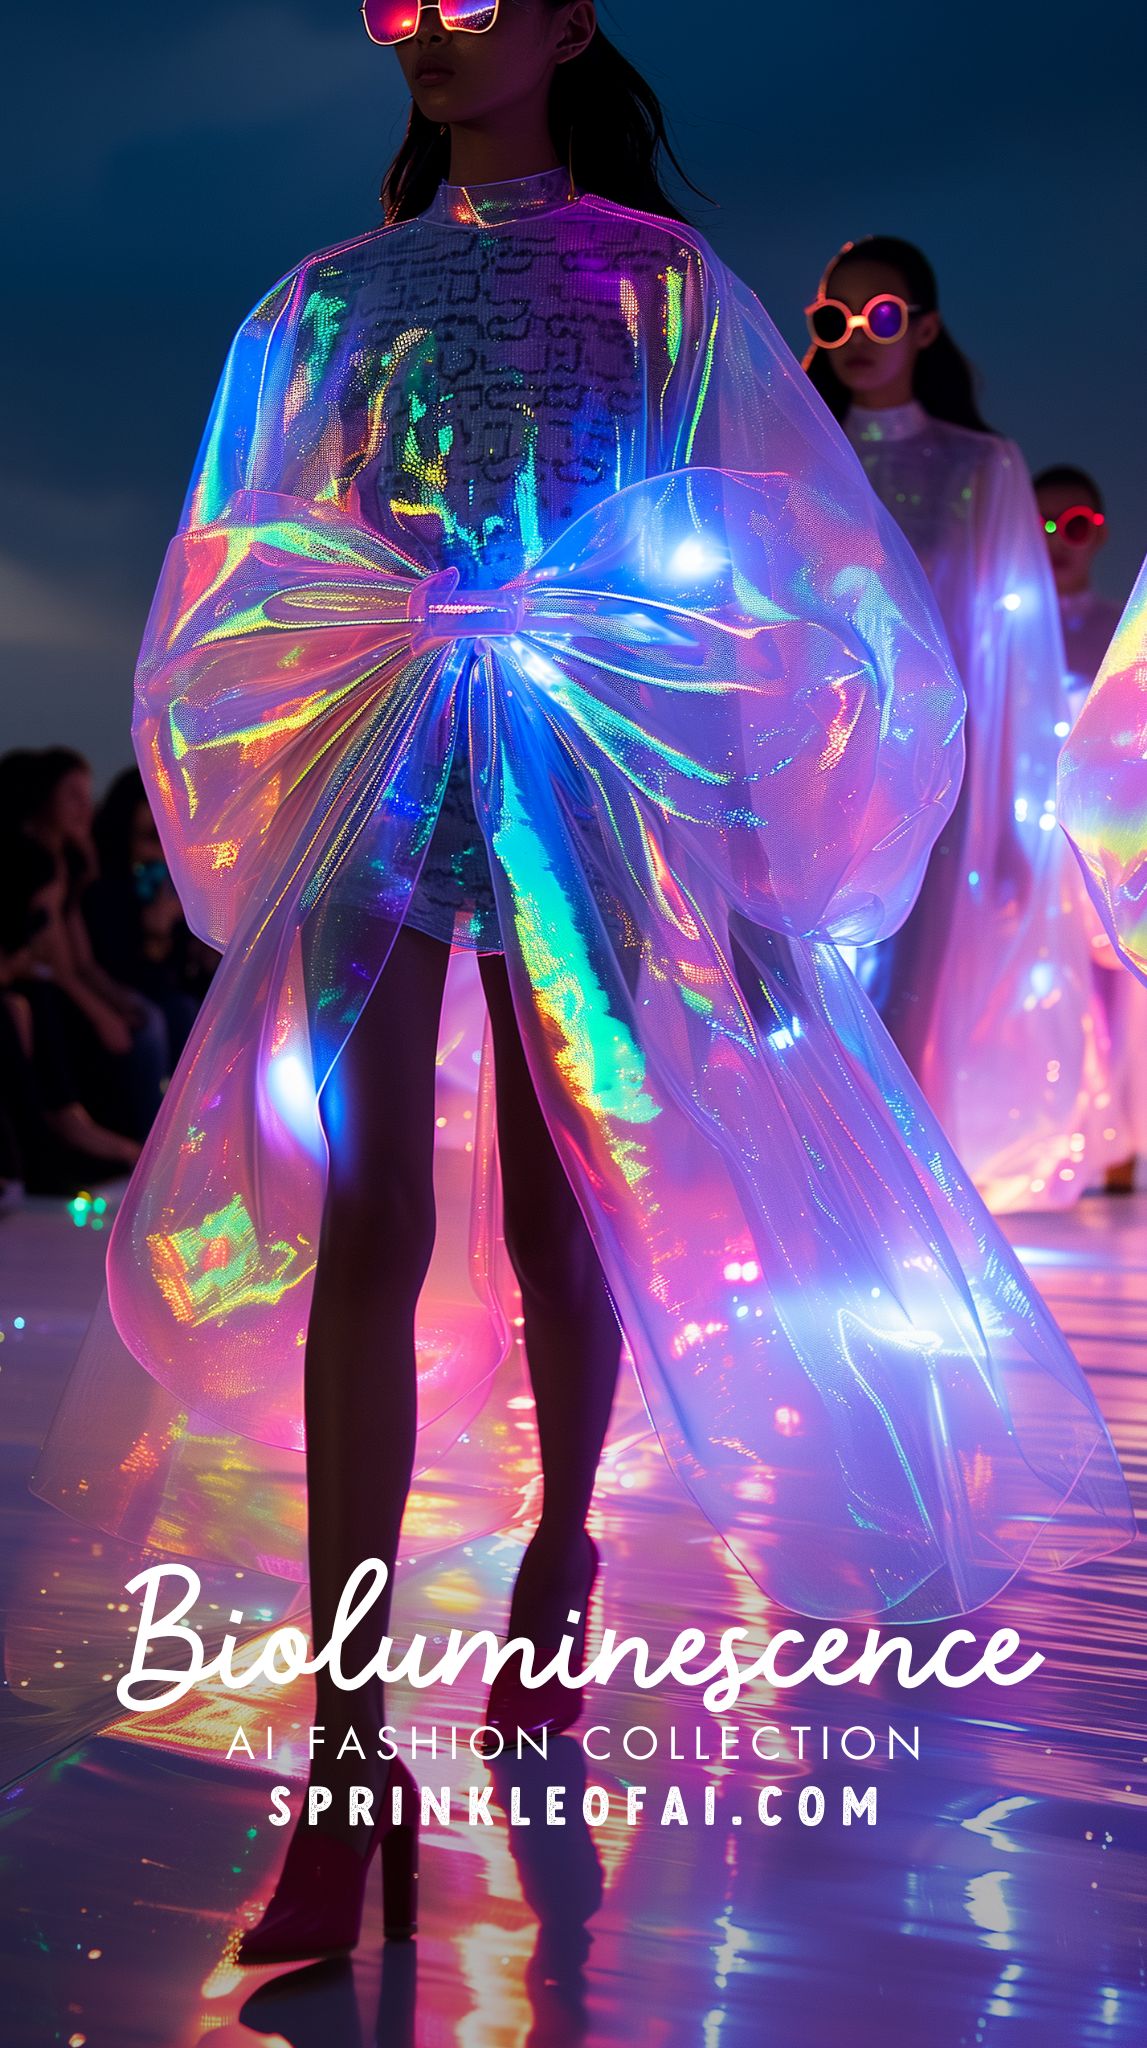 AI Fashion - Iridescent Bioluminescent AI Fashion Collection by Sprinkle of AI for AI Fashion Week